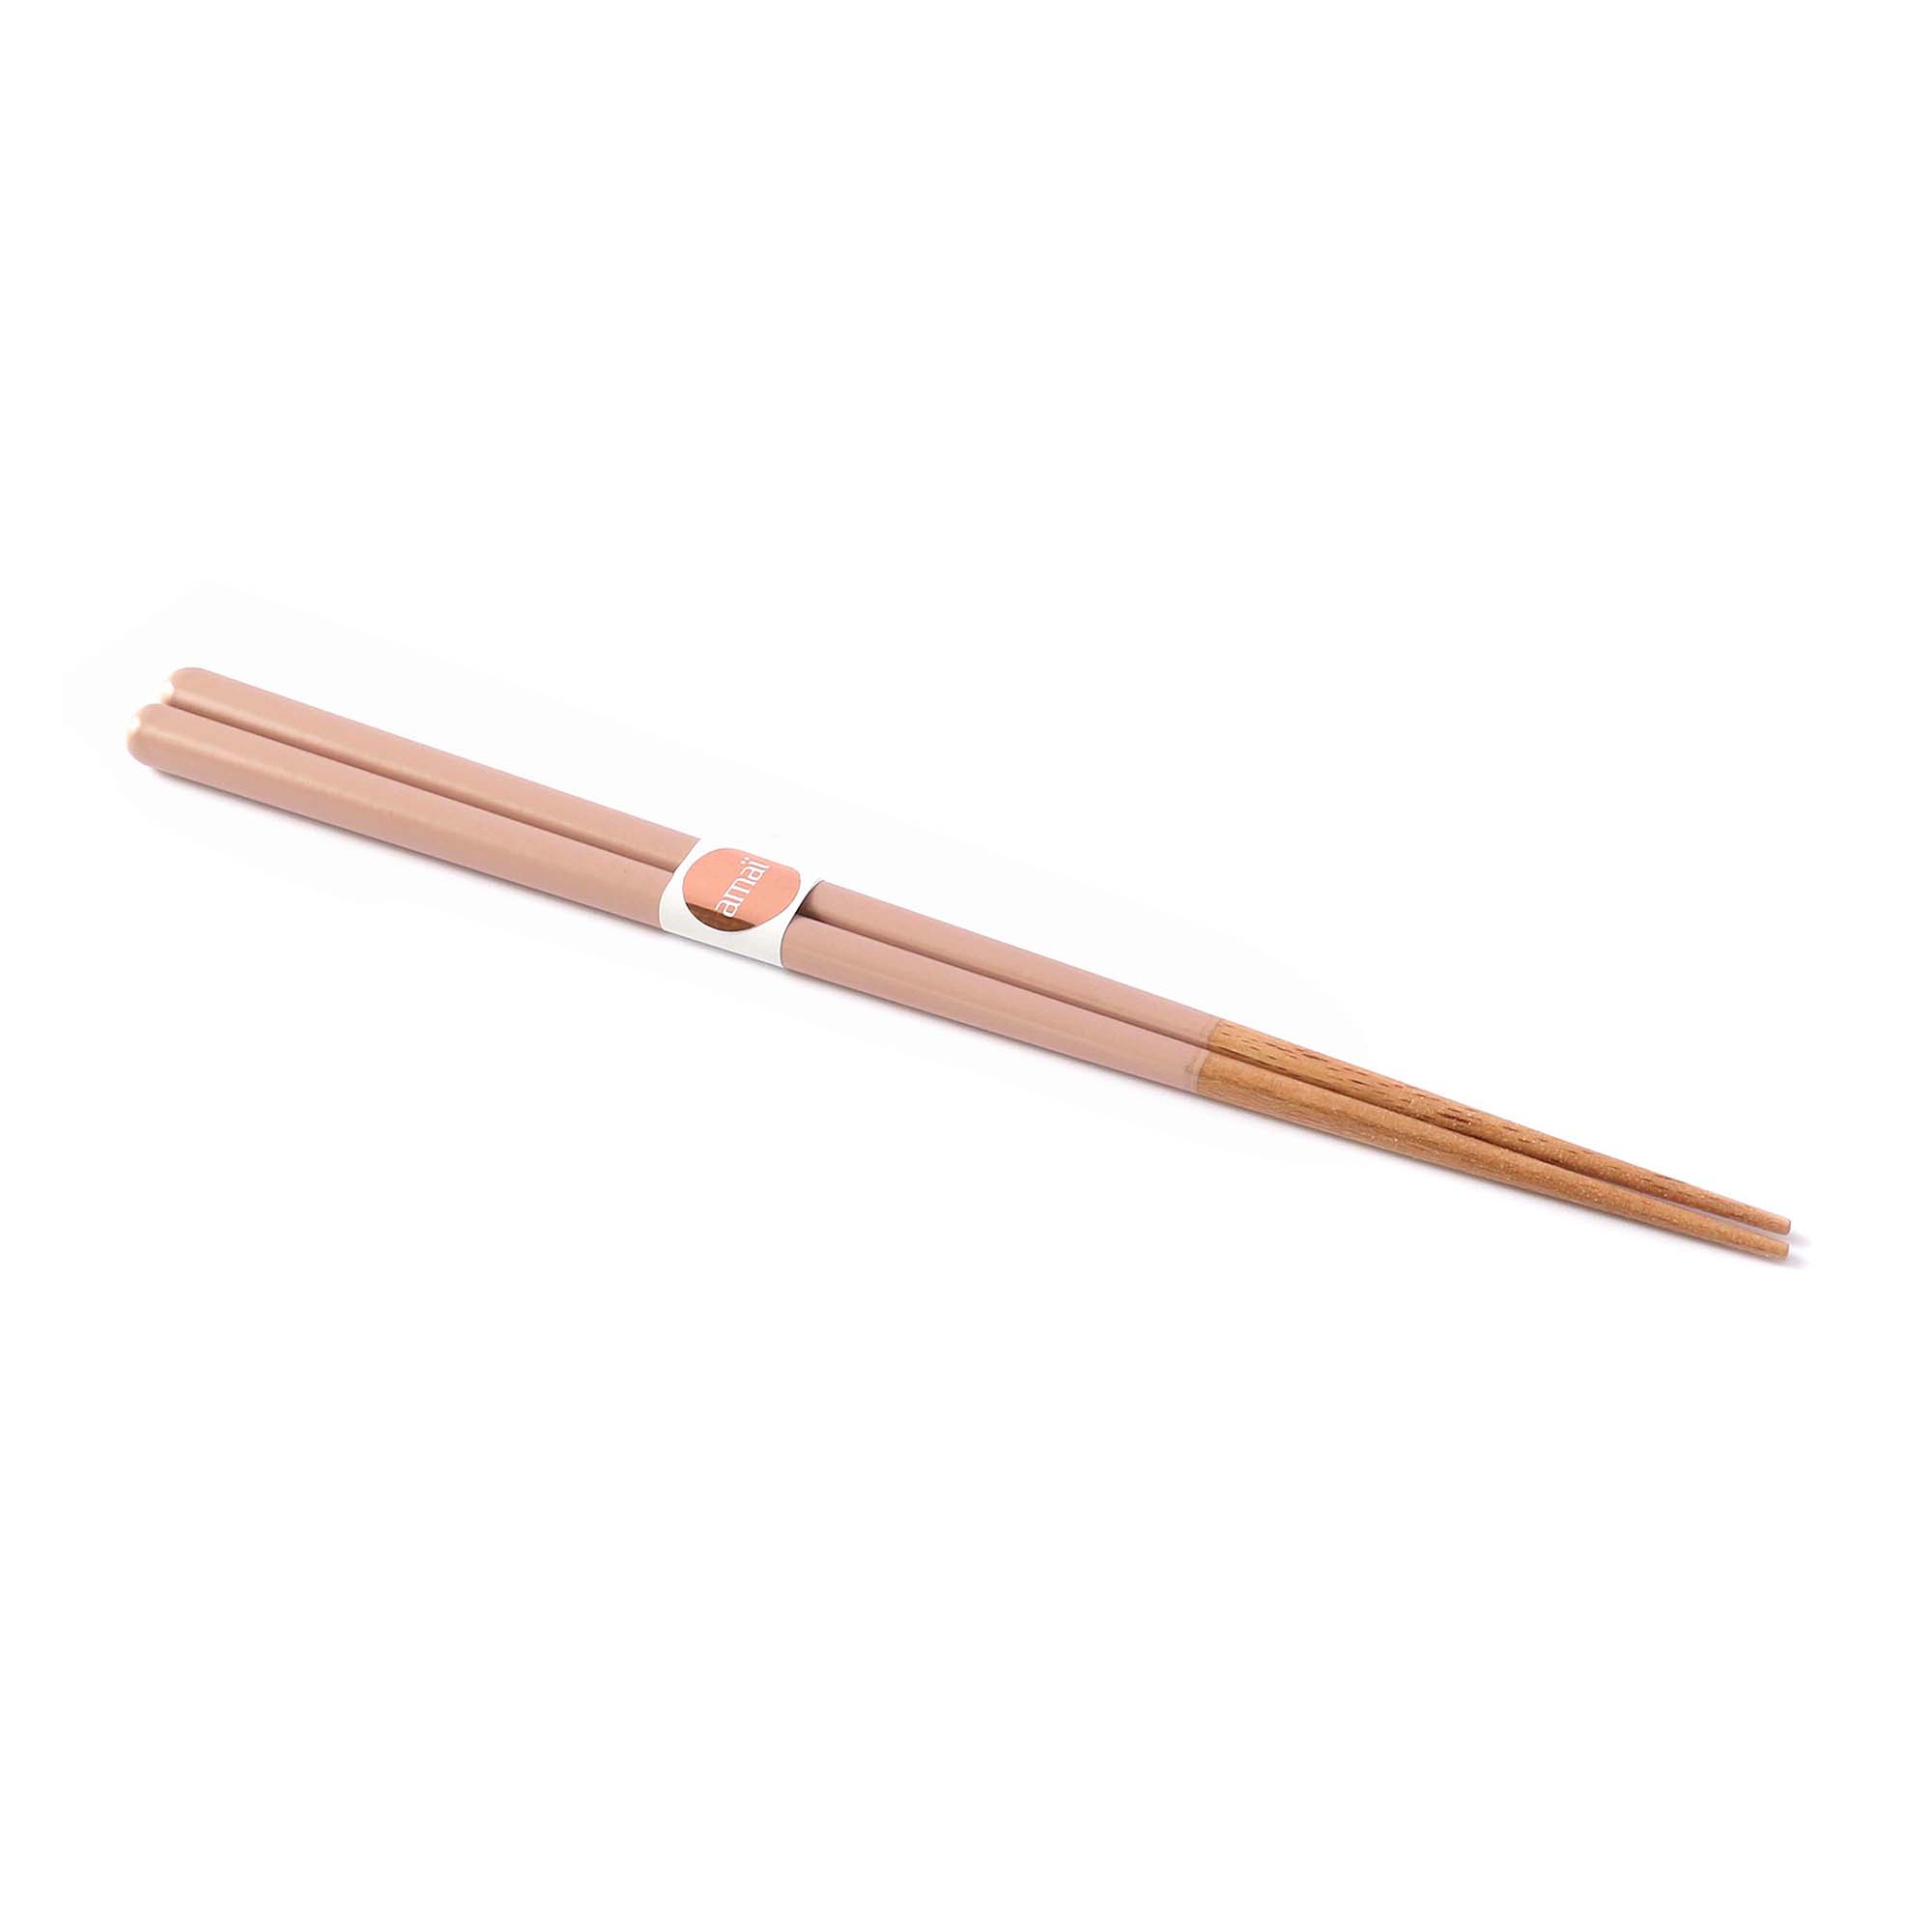 Pokee chopsticks: Dusty pink